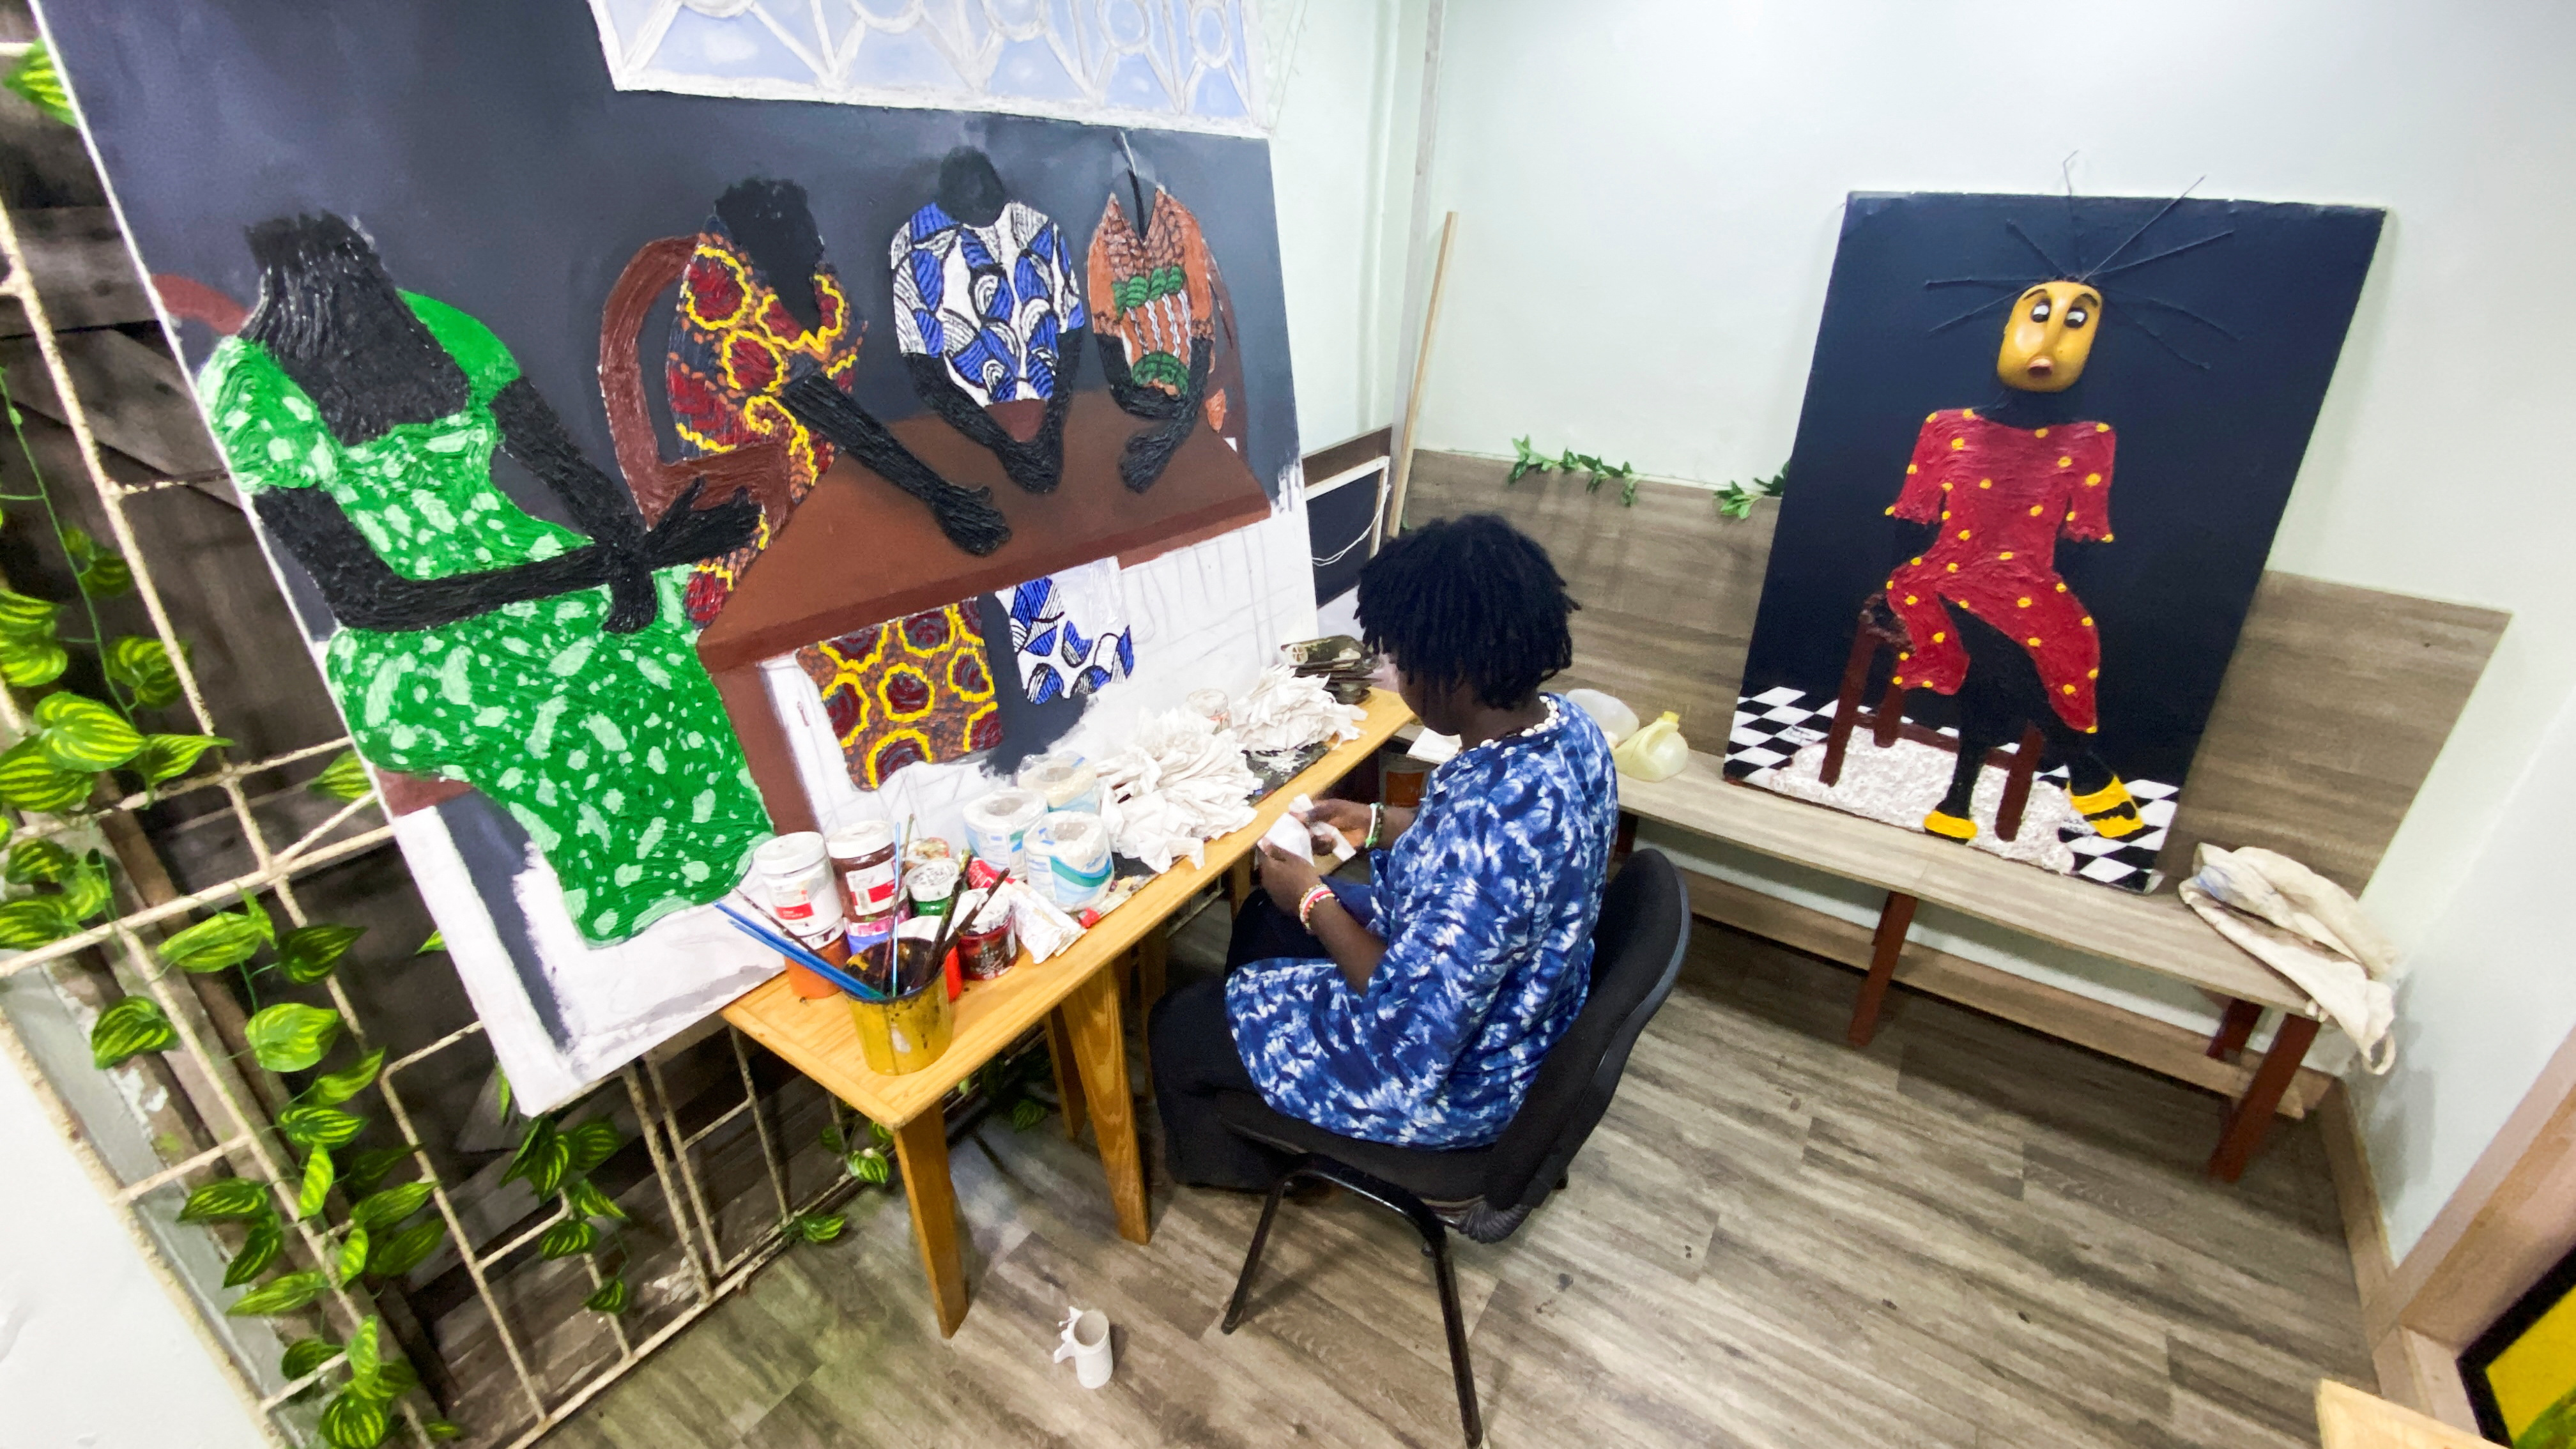 Nigerian artist, Adeyemi Oluwajuwonlo sorts recycled materials to produce artworks at her studio in Lagos